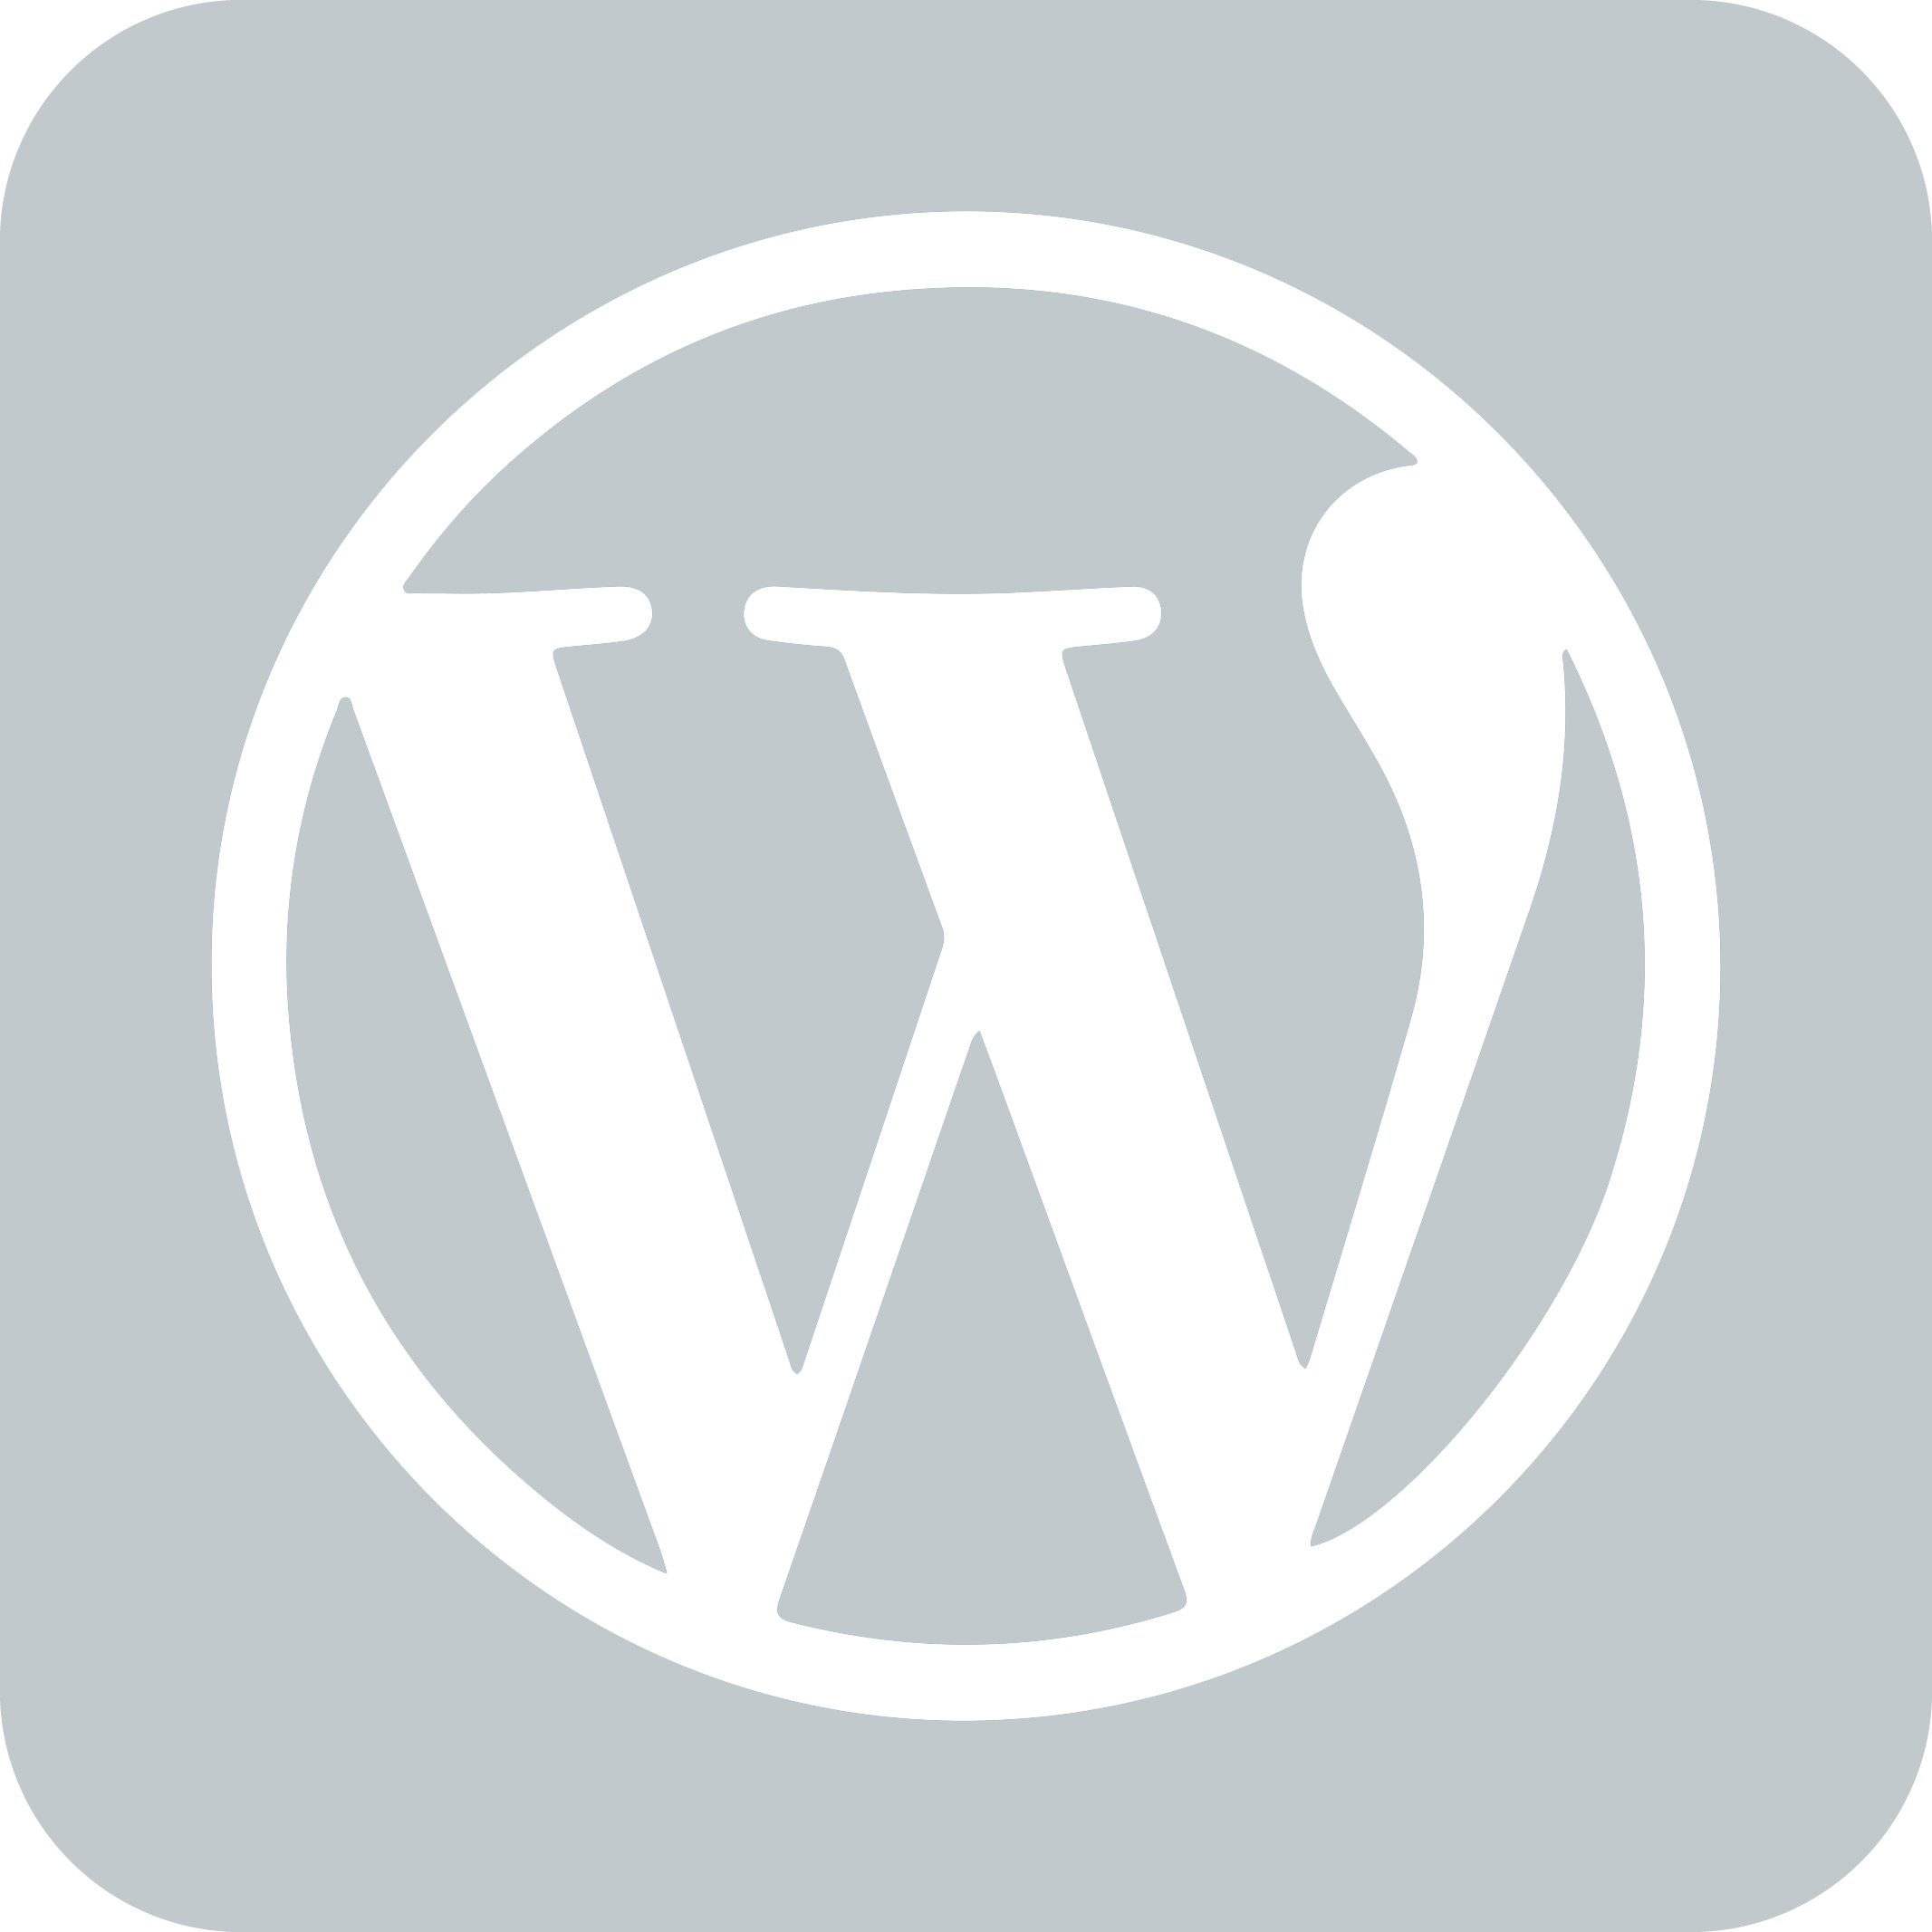 Publish on WordPress